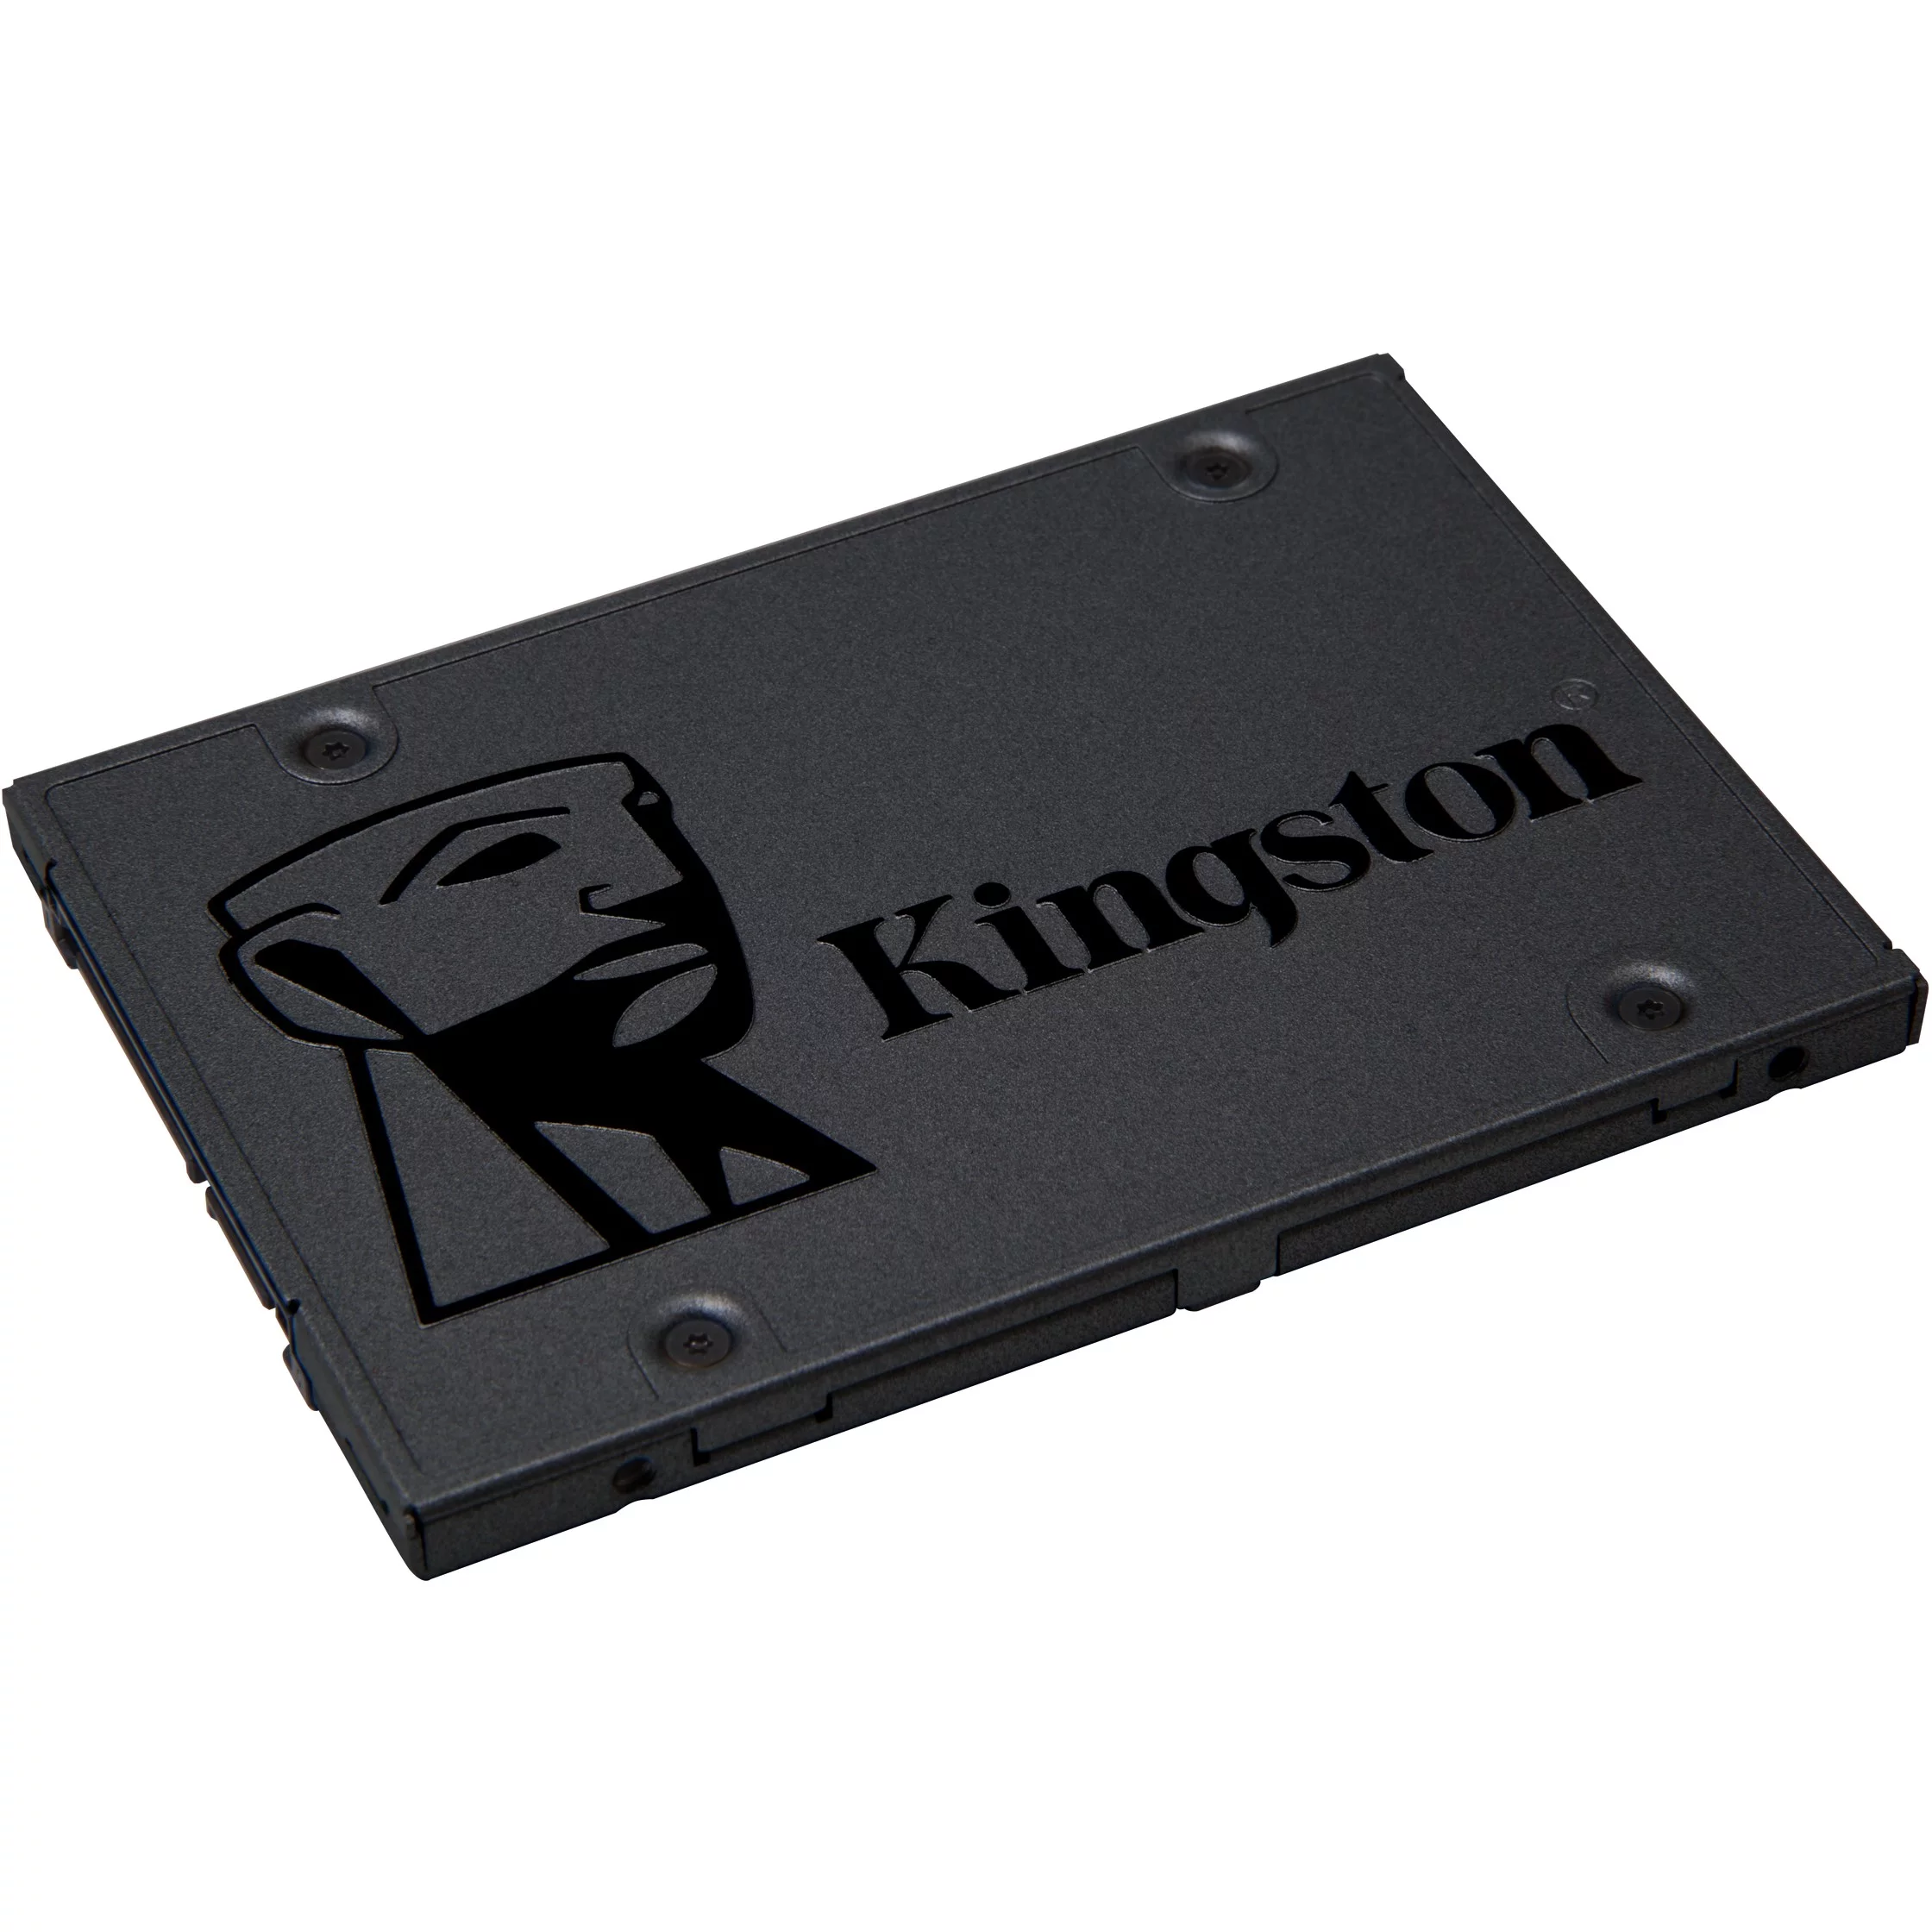 Kingston Technology A400 2.5“ 240 GB Serial ATA III TLC